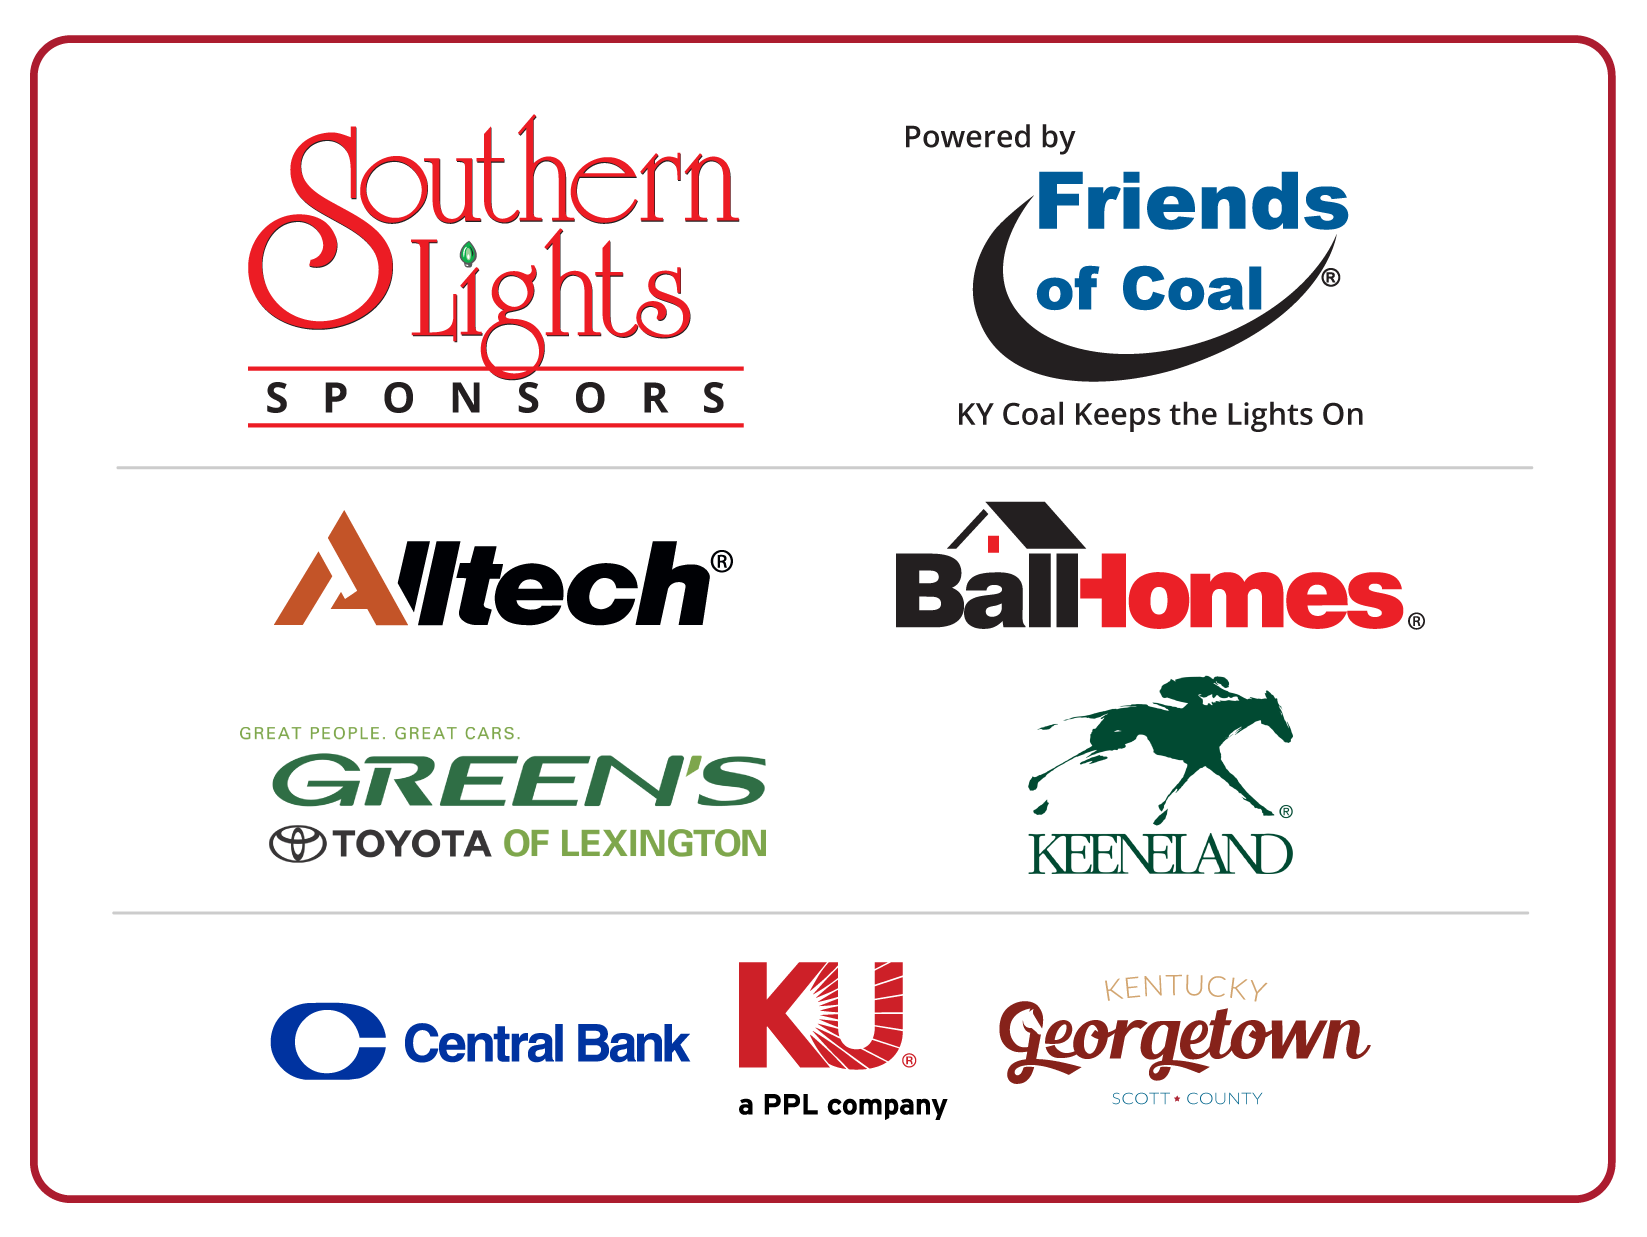 Southern Lights Sponsors